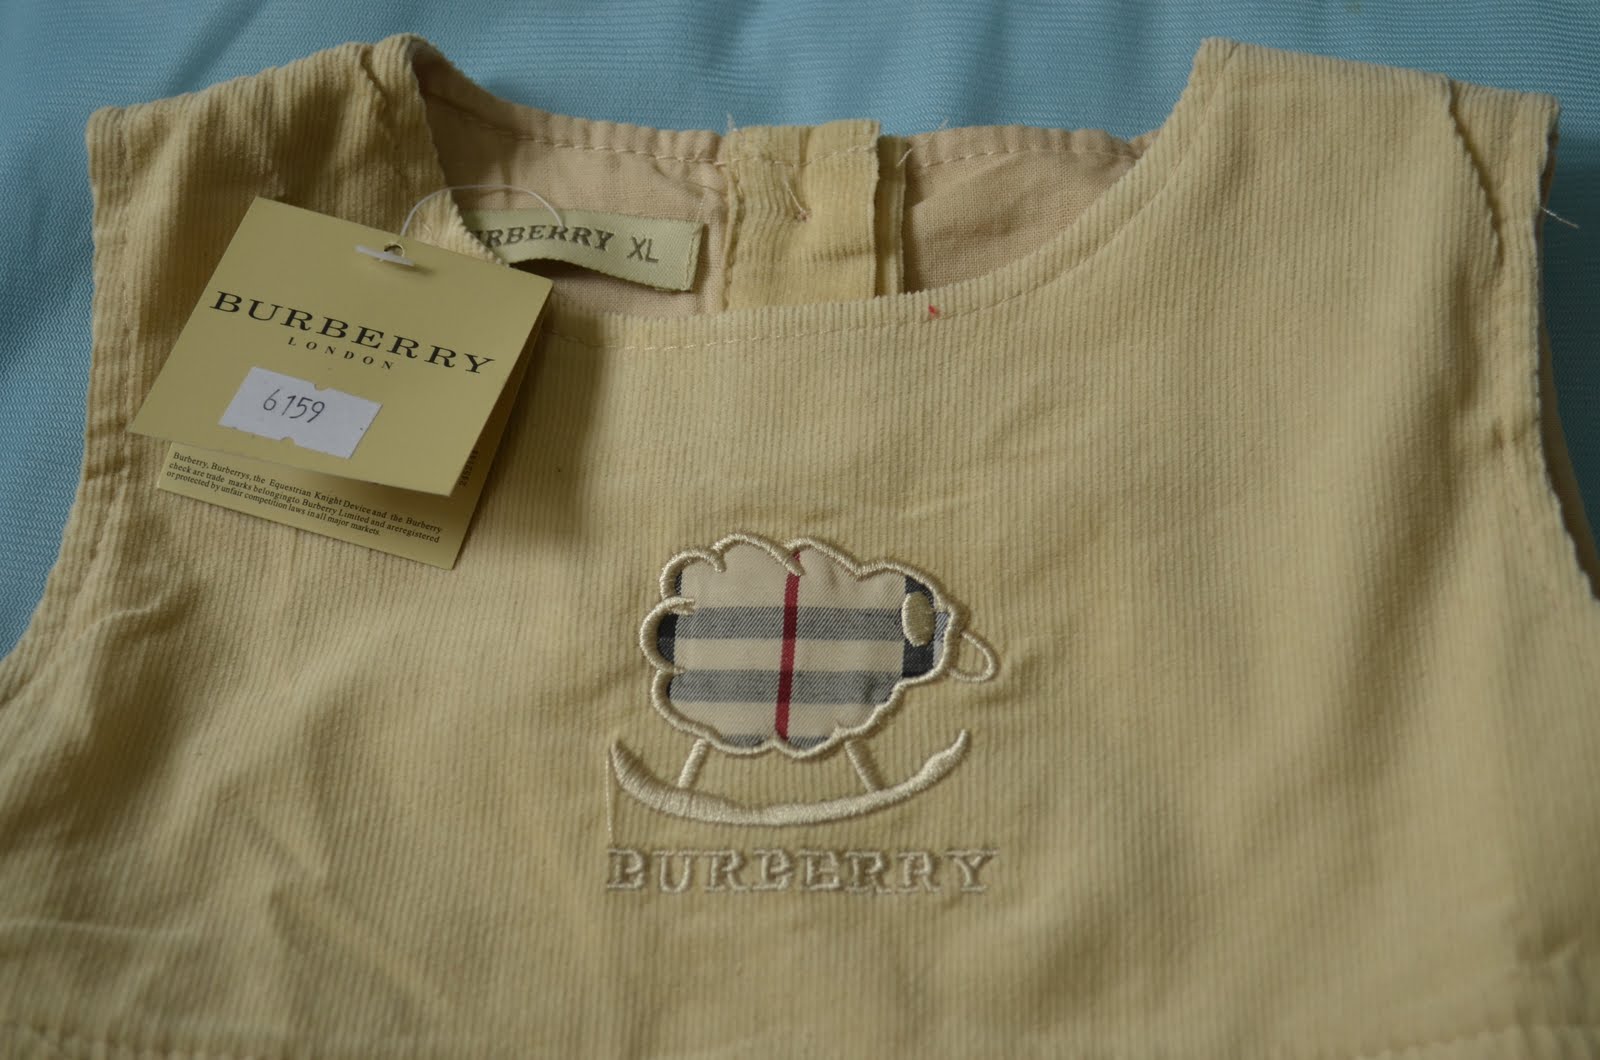 Burberry Dress - BUY BaBy CLOTHES @ Kedai Baju BaBy